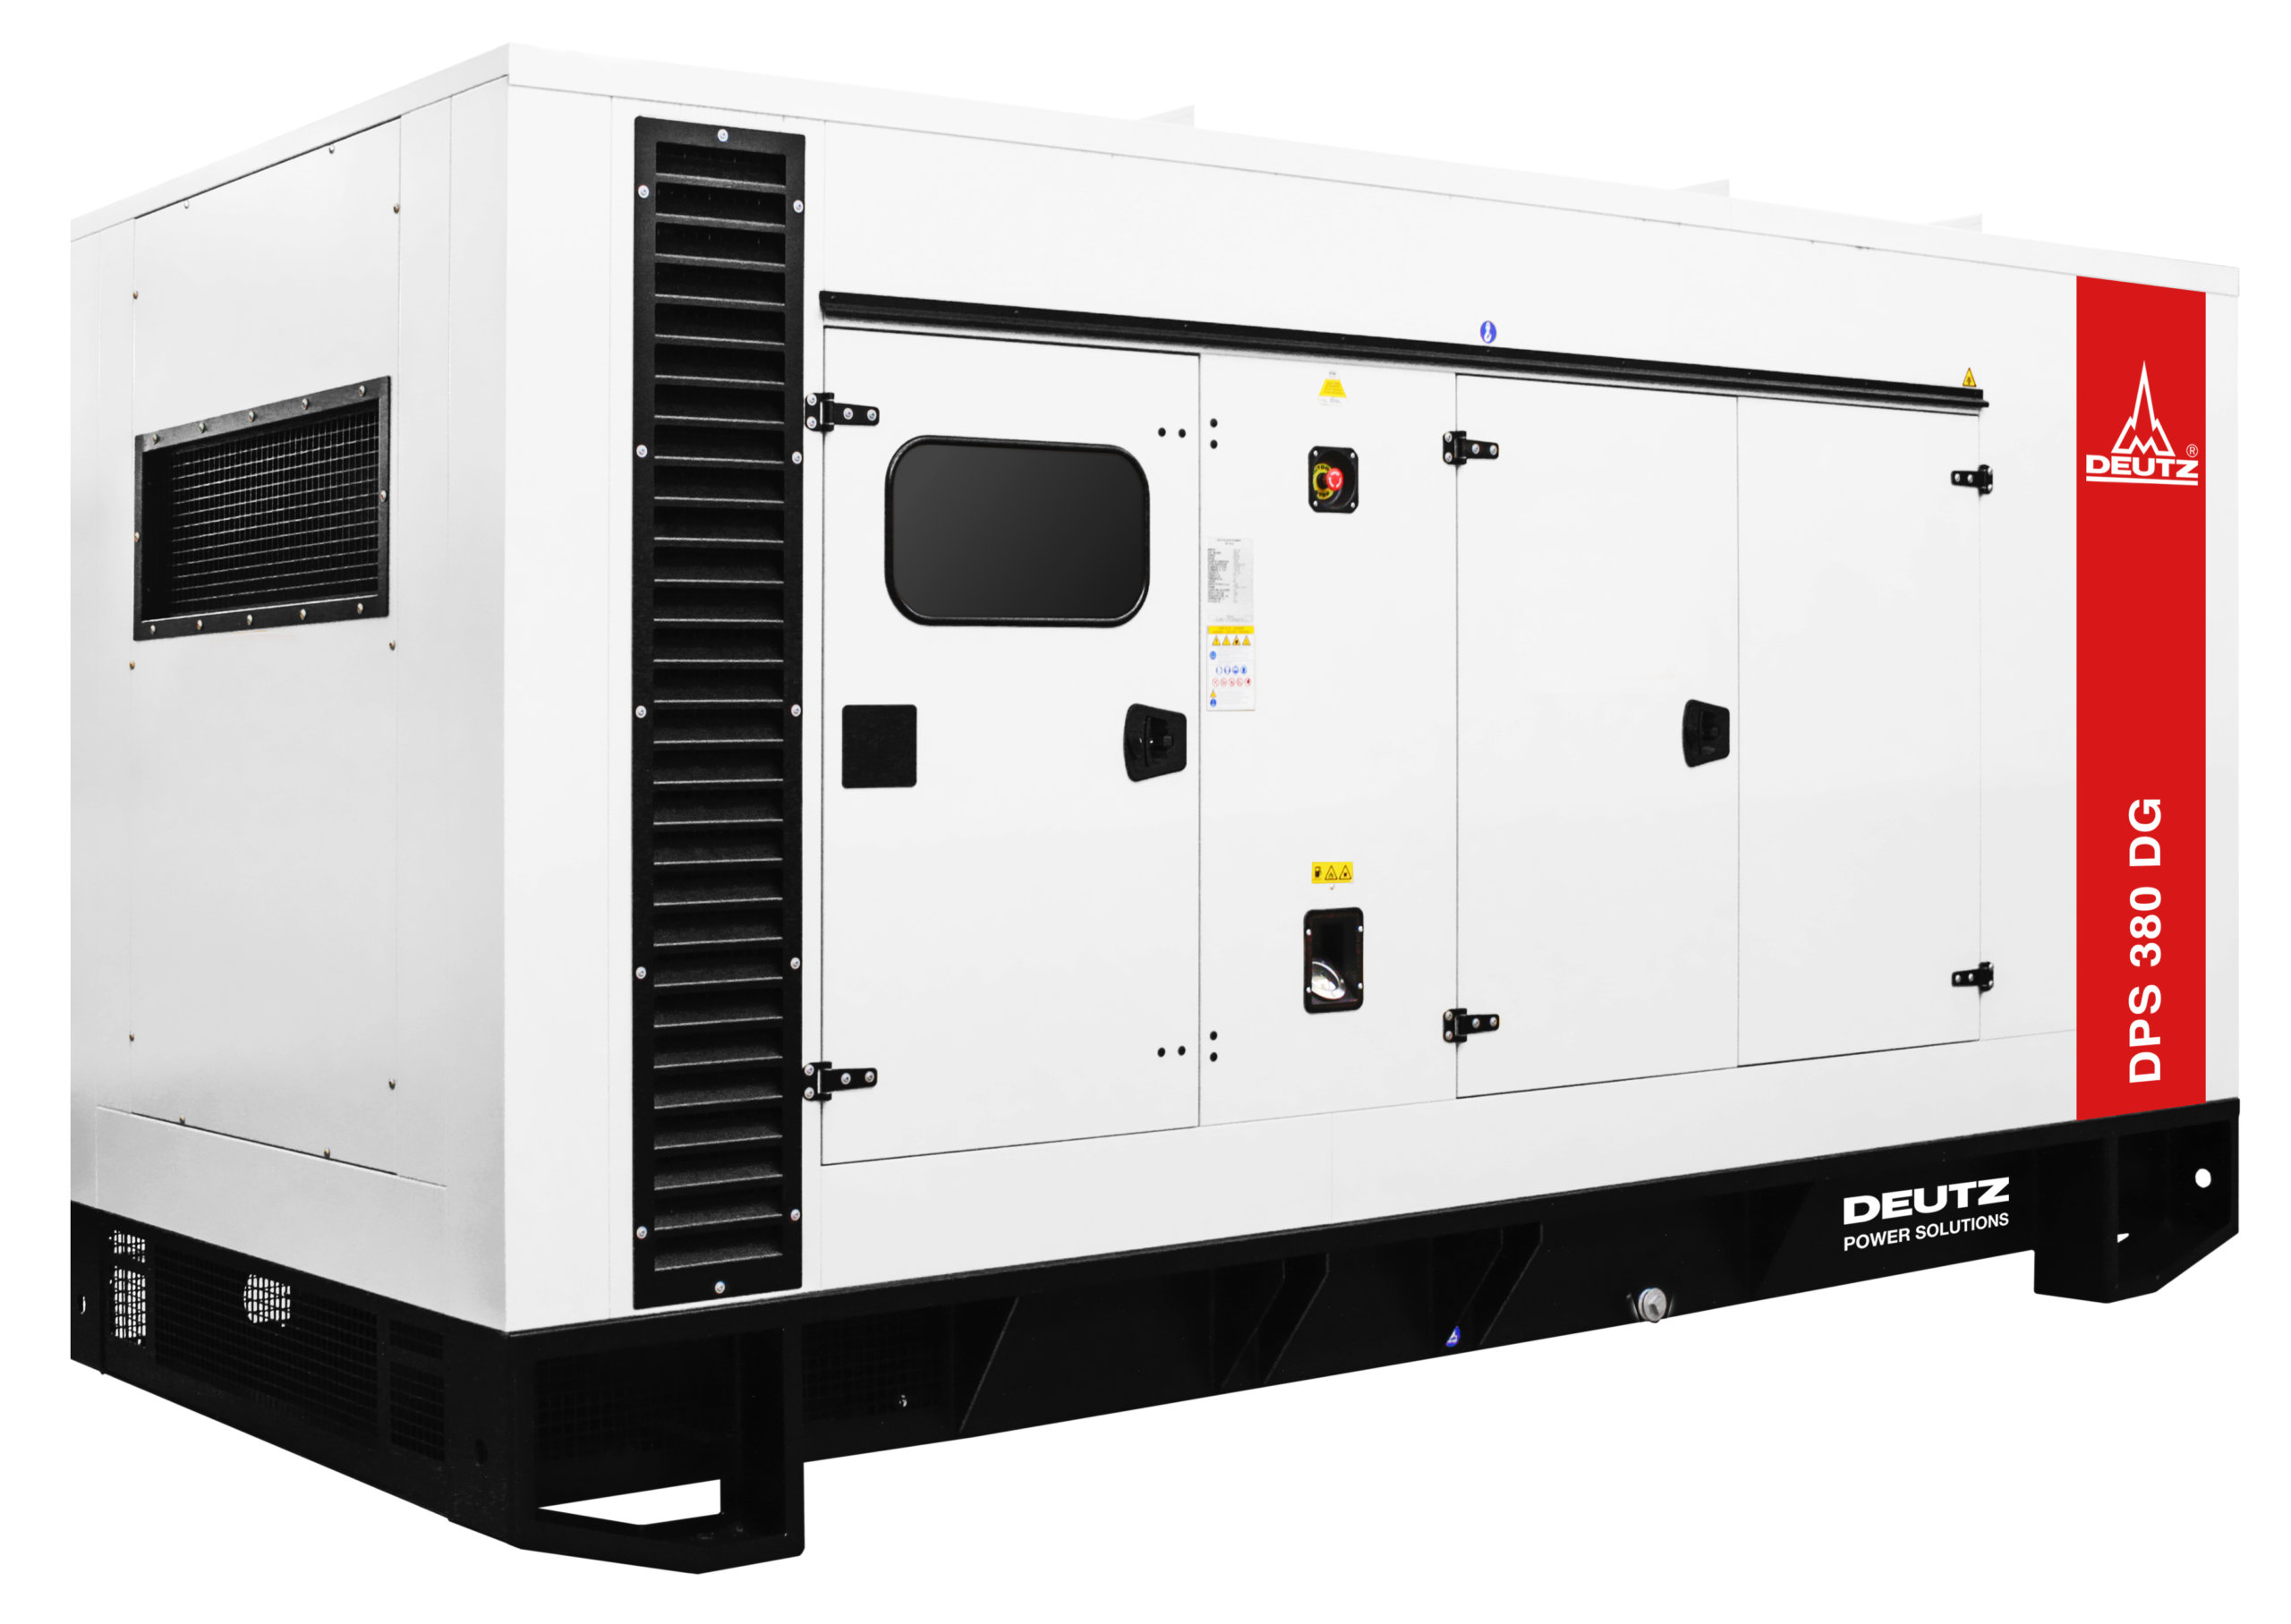 Deutz DPS 380 DG diesel generator